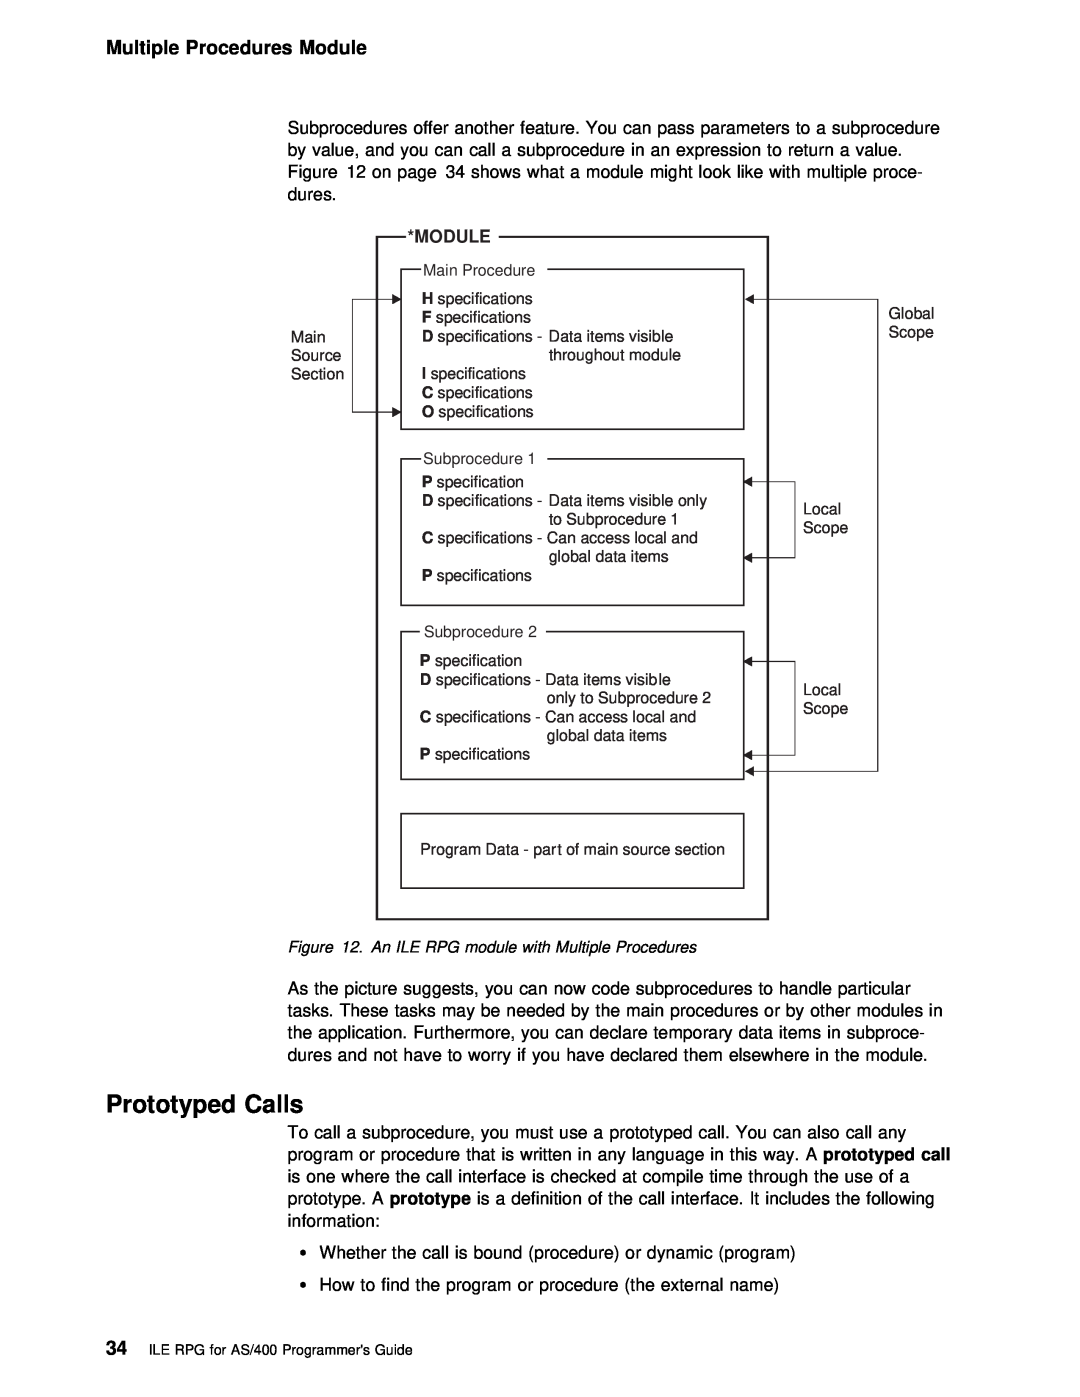 IBM AS/400 manual Prototyped Calls, Multiple Procedures Module 